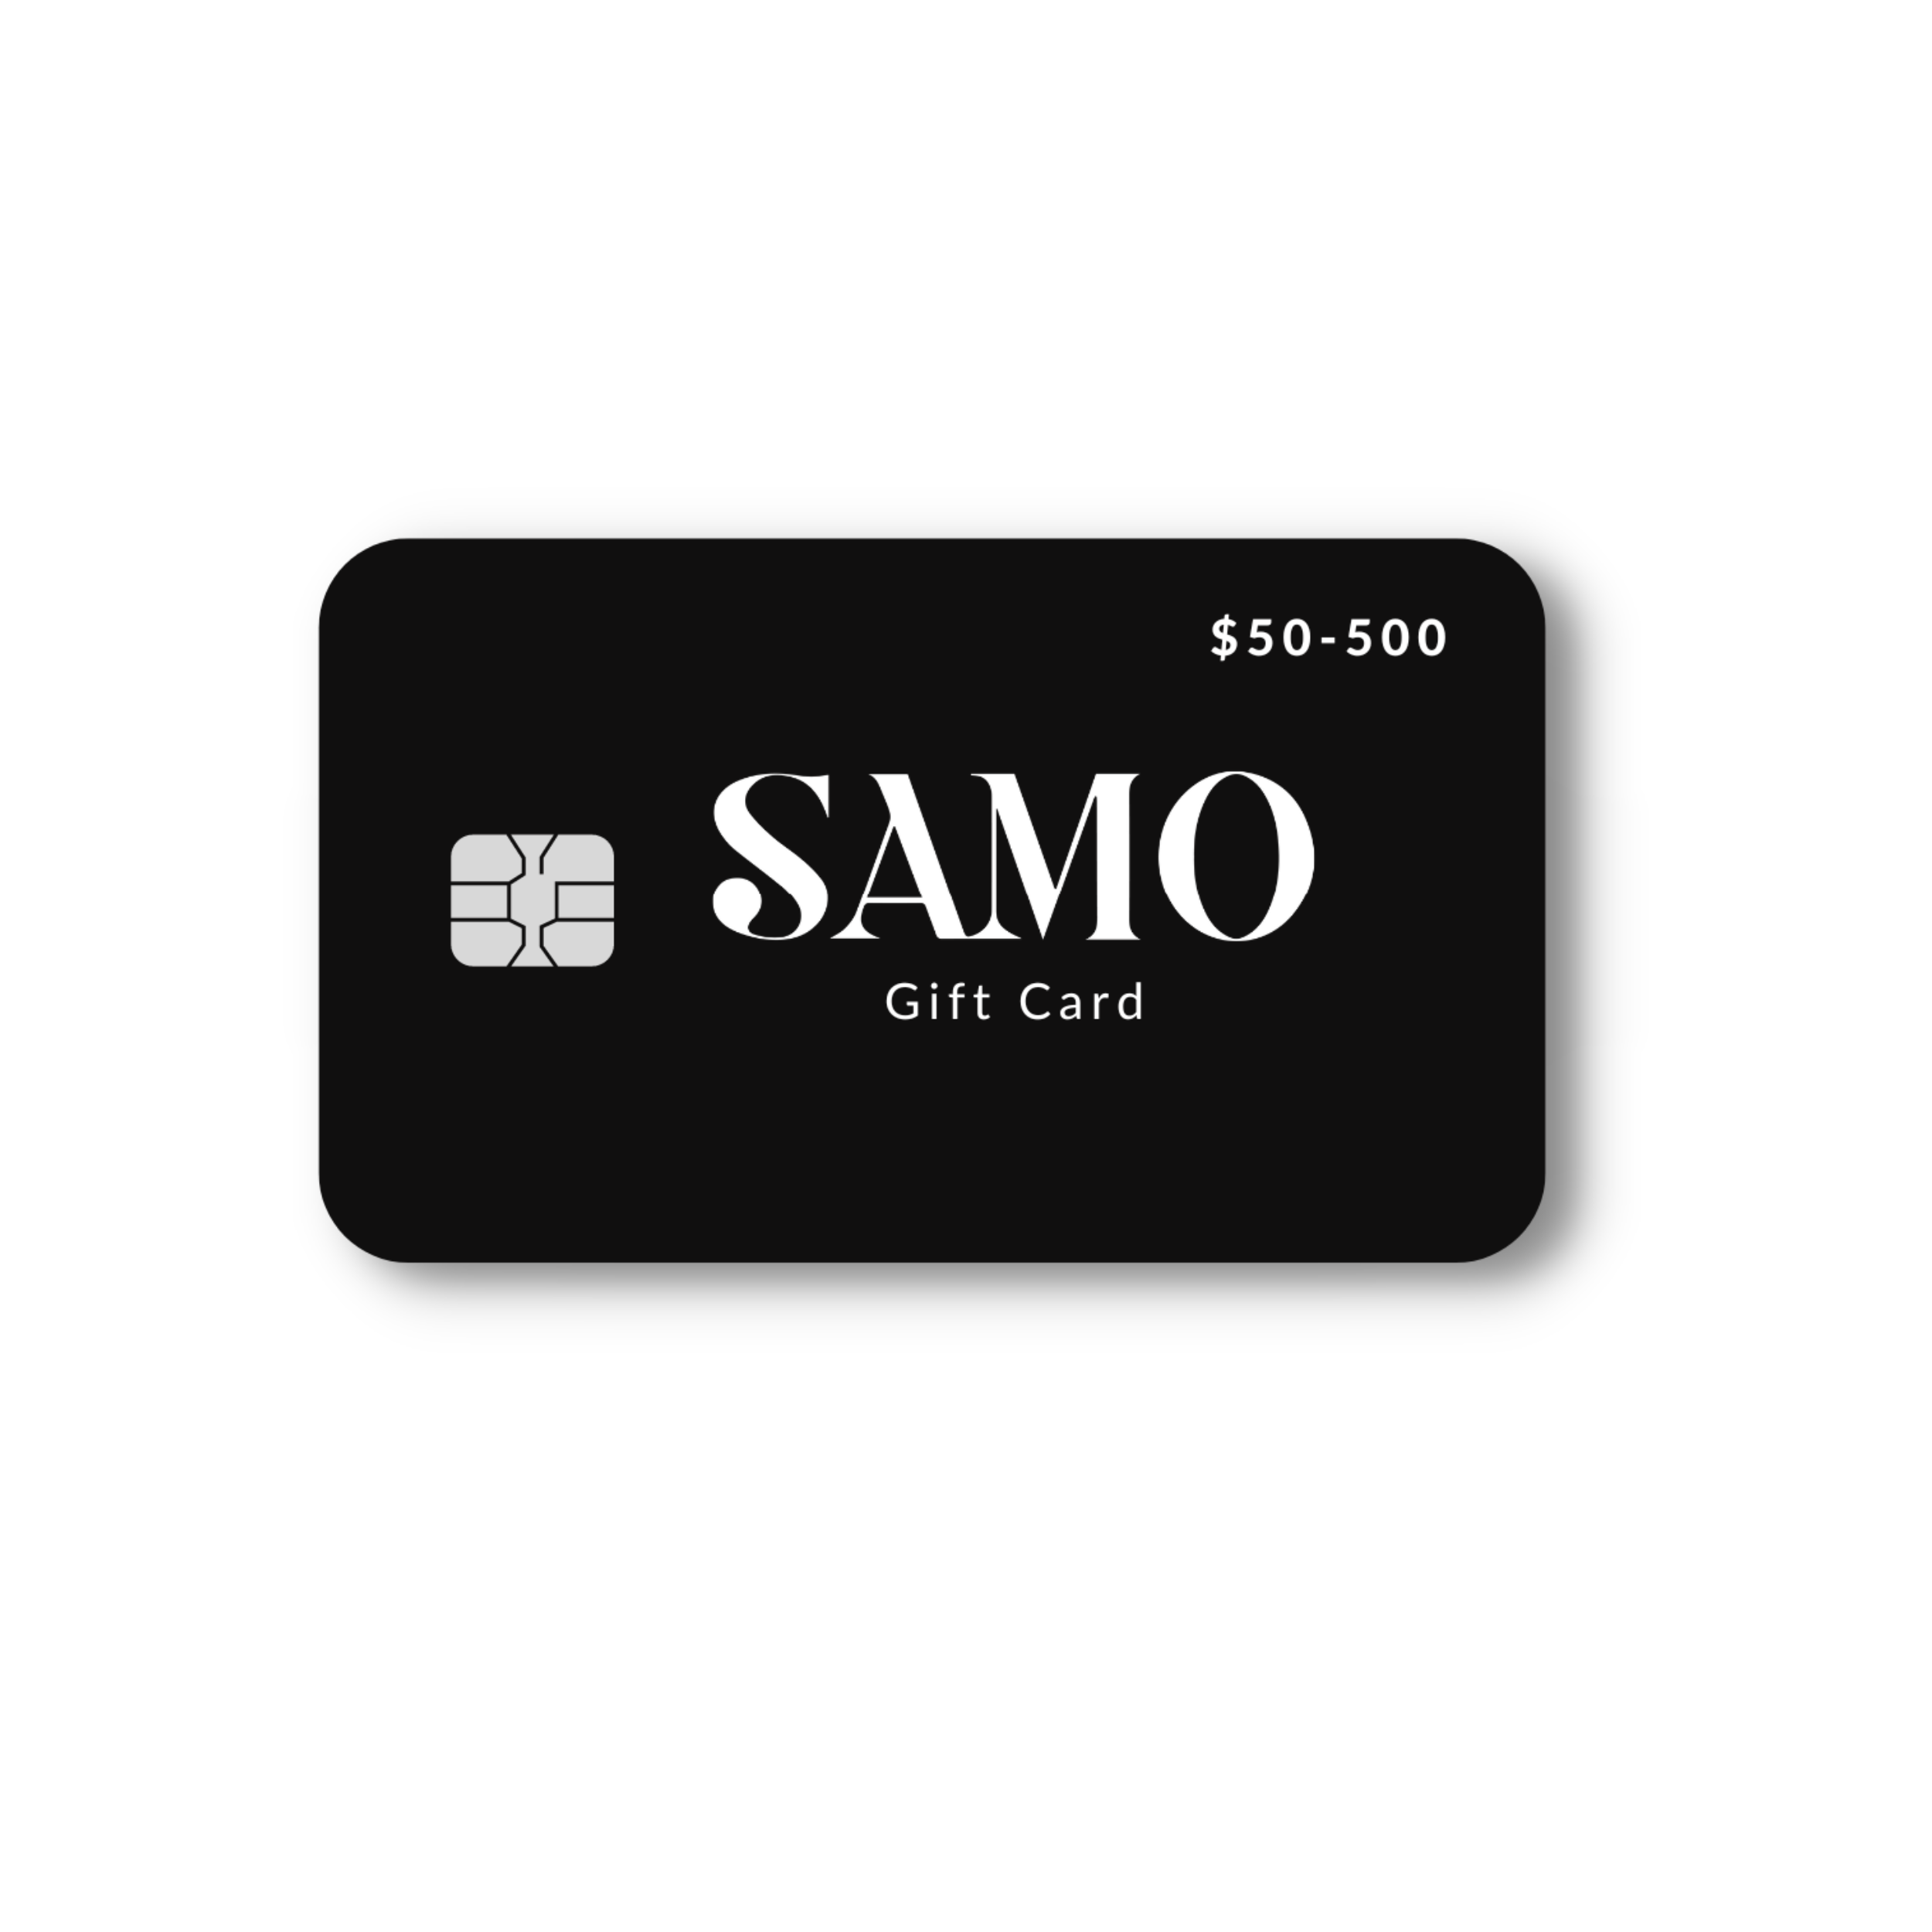 SAMO Gift Cards